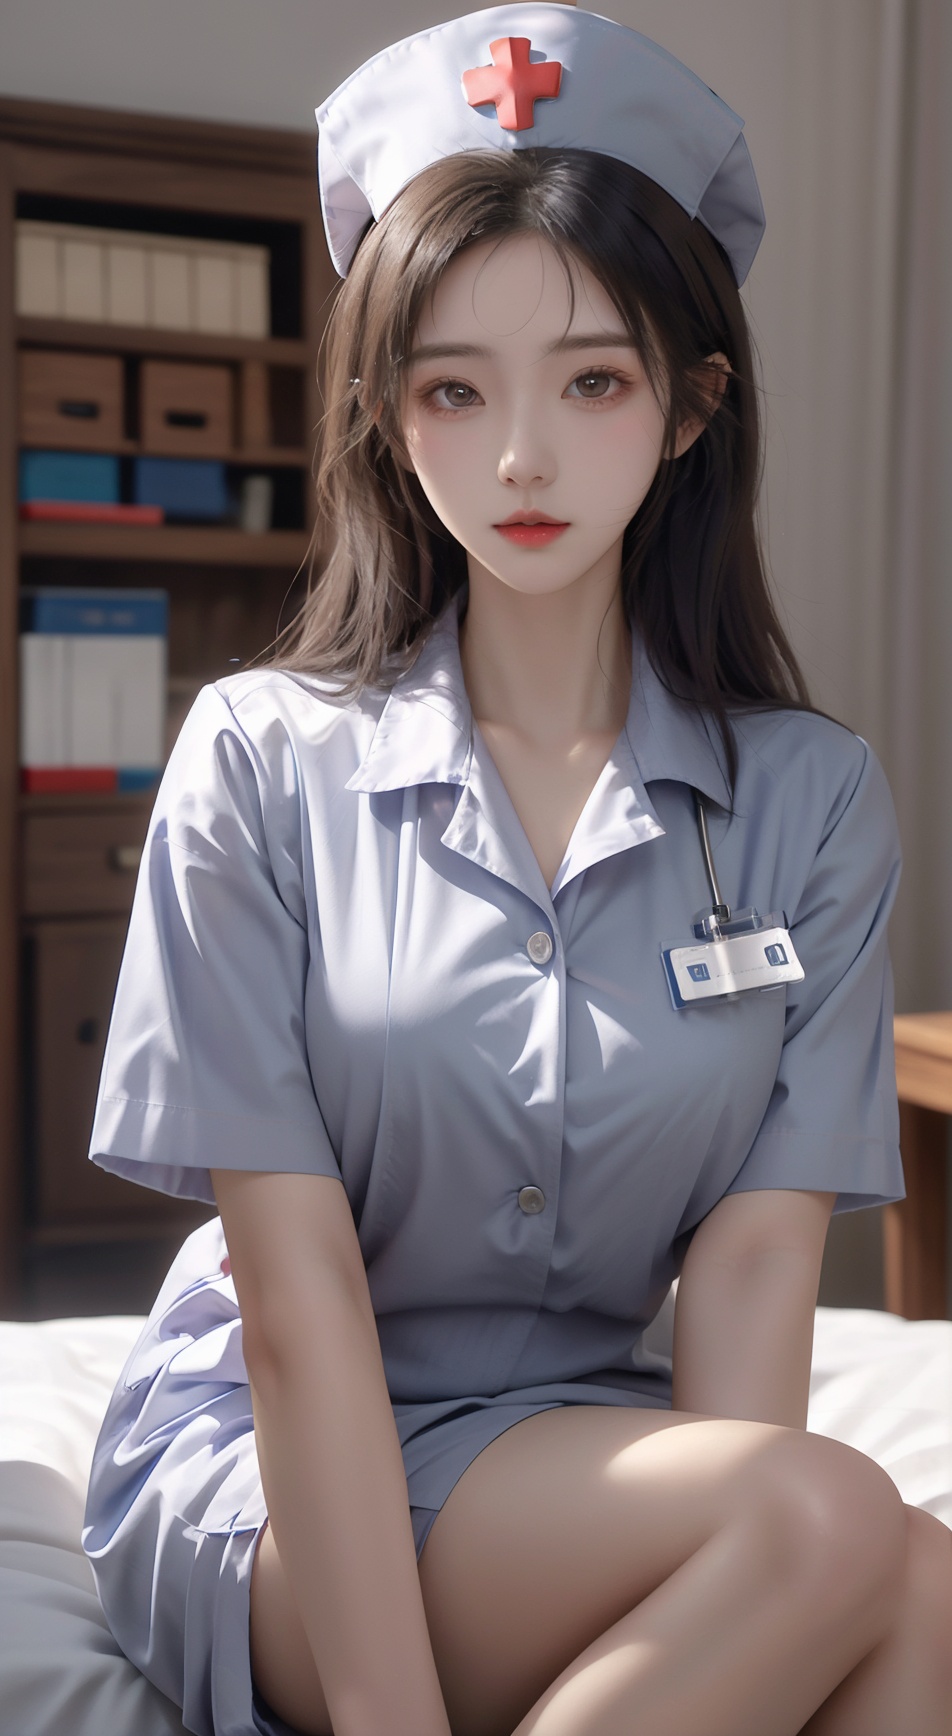  1 girl, wearing transparent white gauze nurse uniform, nurse hat, red cross,Nebula, tutututu, 21yo girl, Trainee Nurse